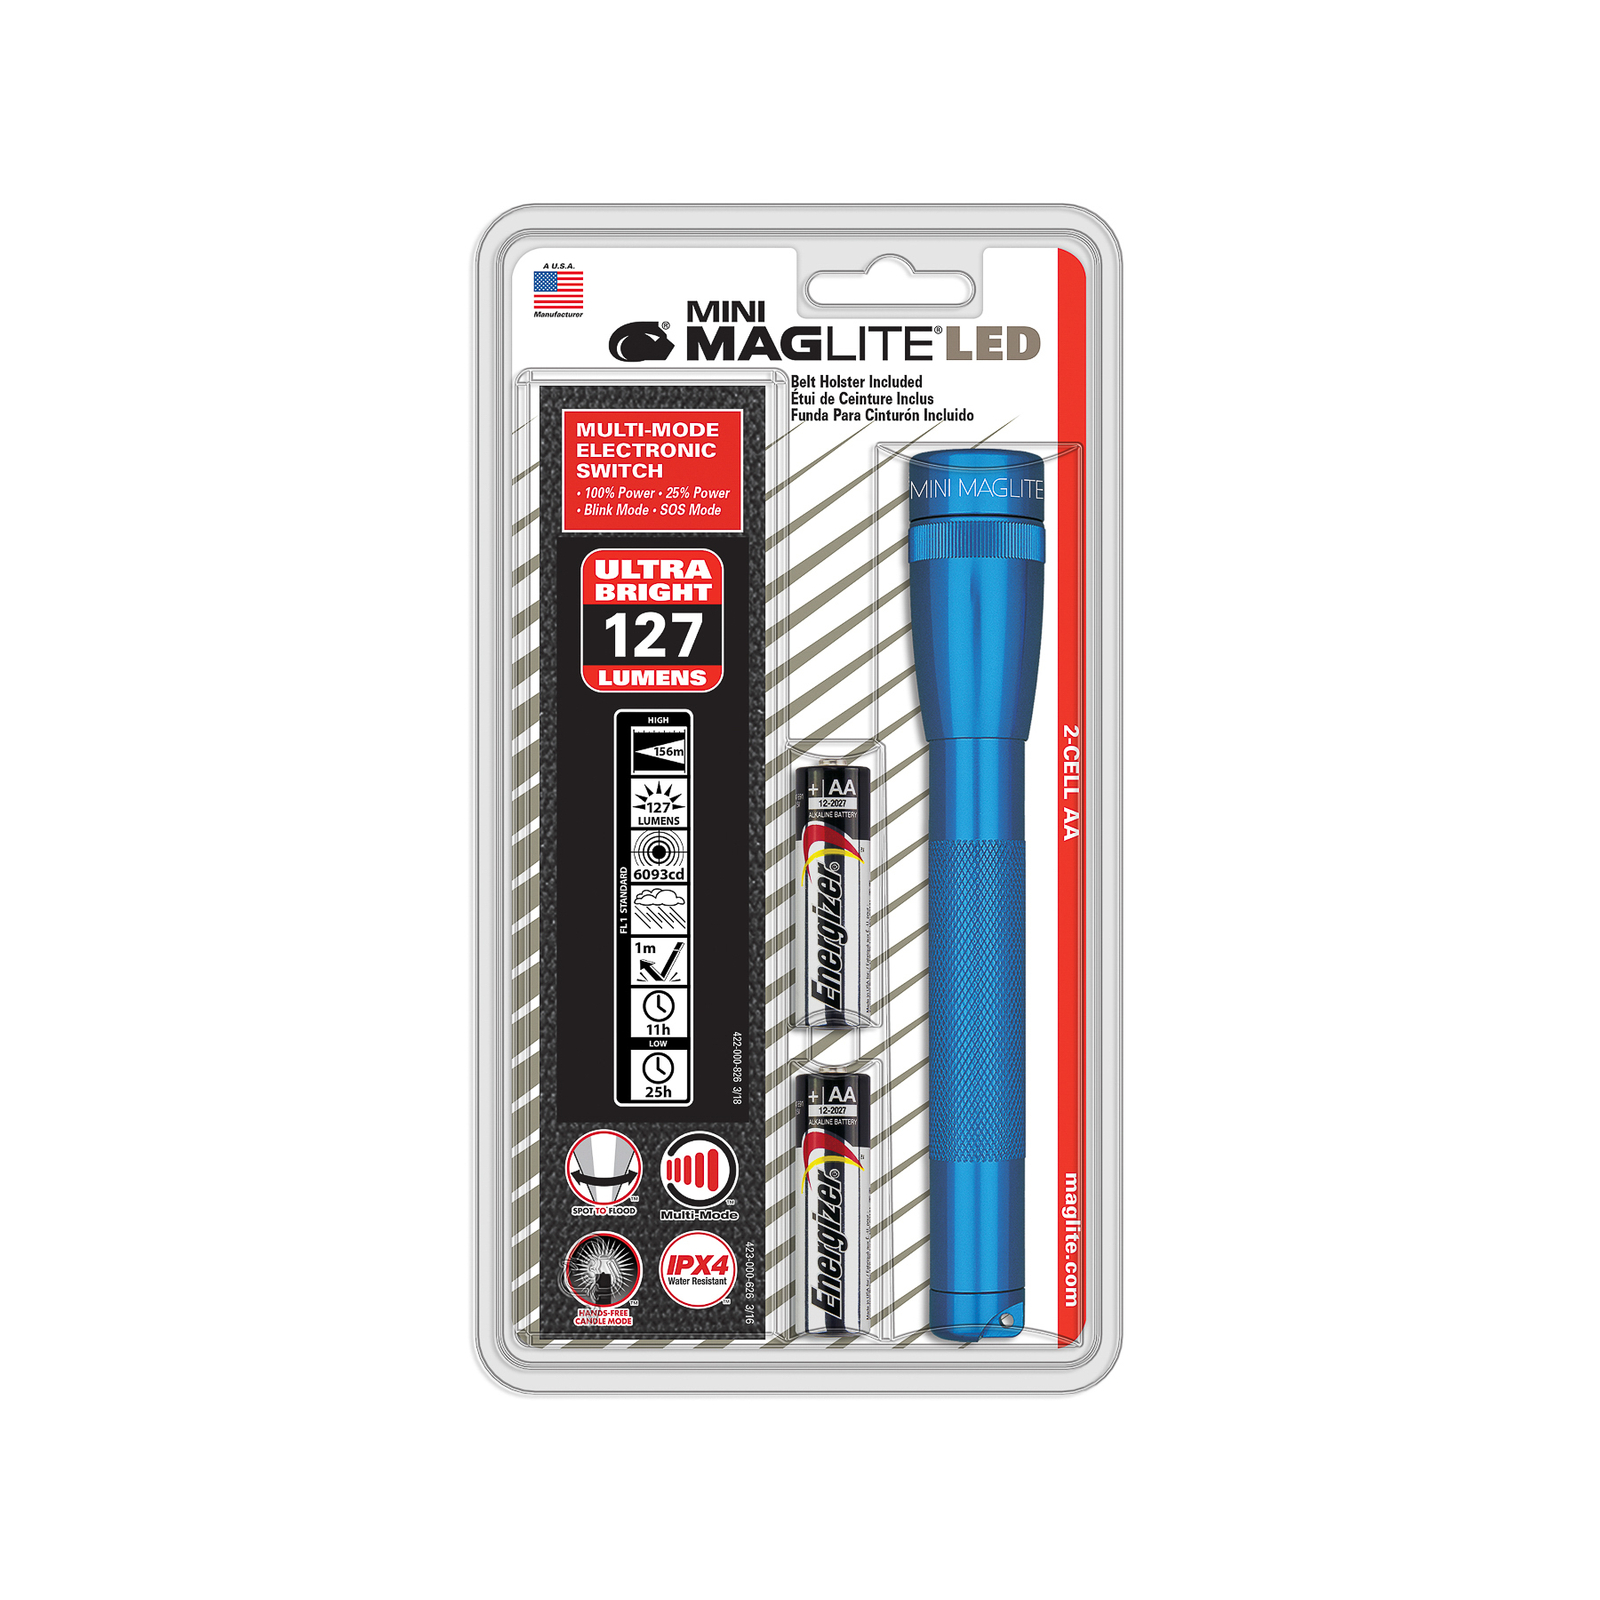 Maglite LED taskulamppu Mini, 2-Cell AA, holsteri, sininen